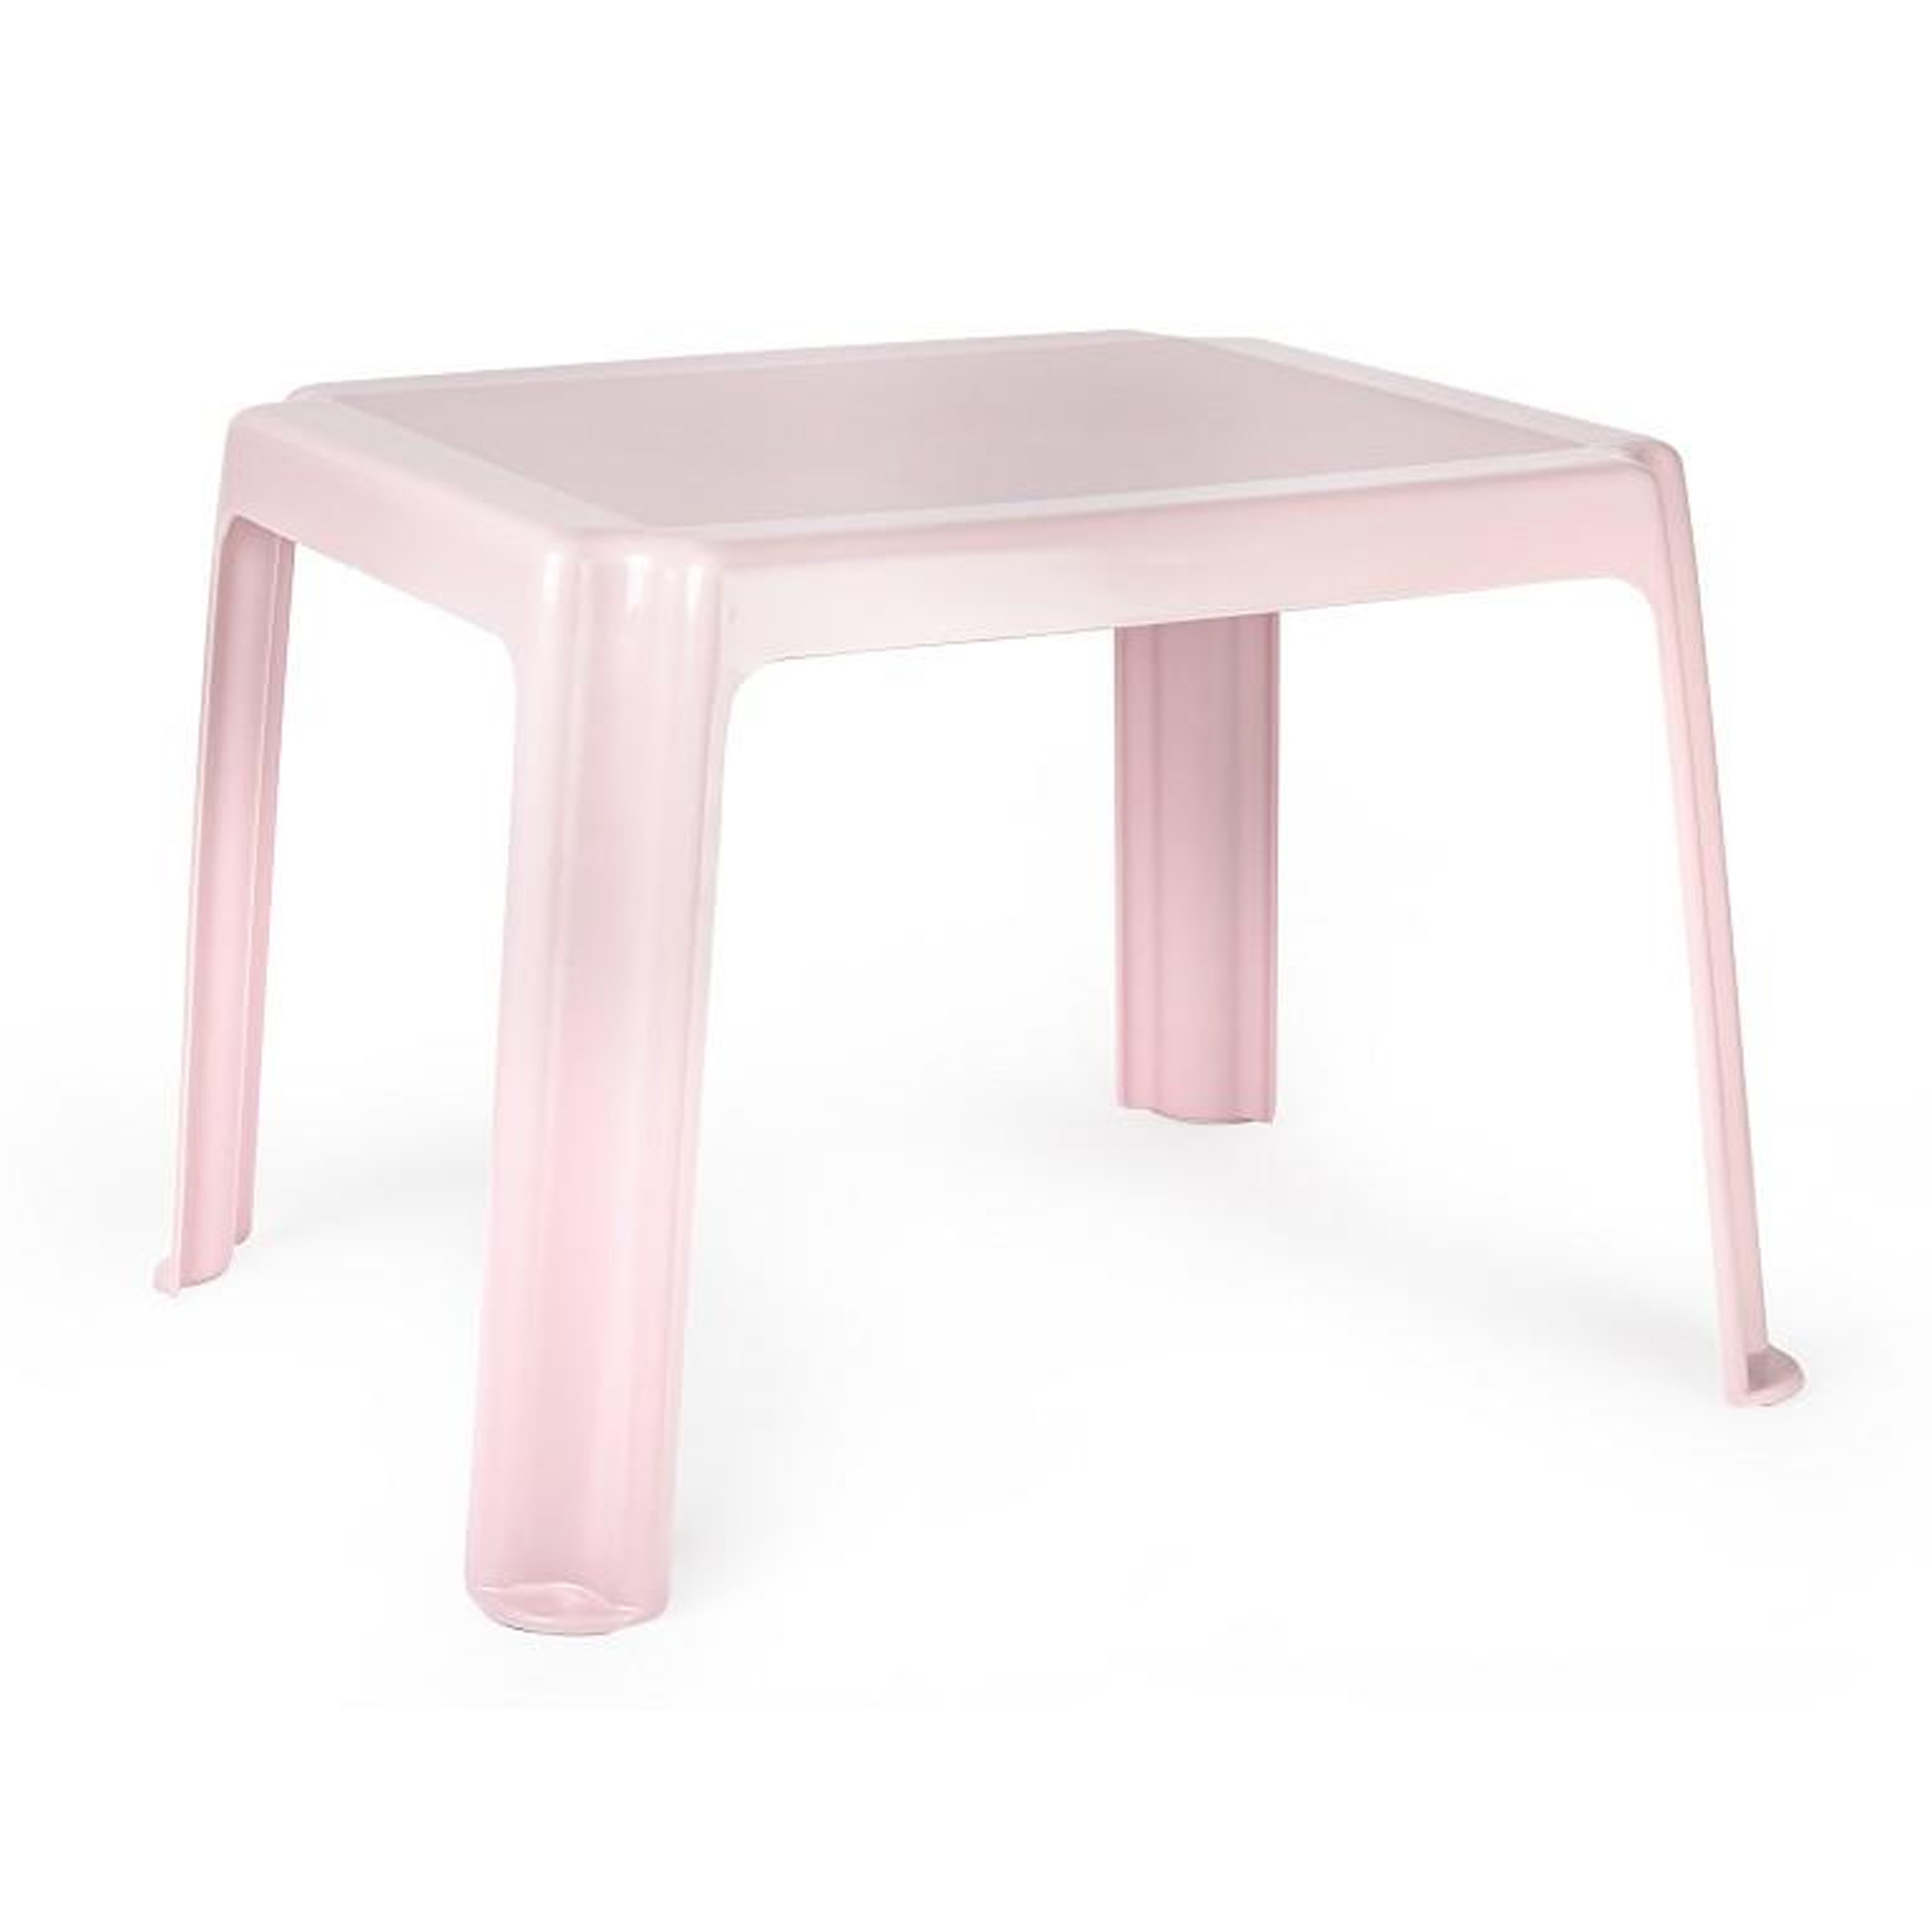 Kunststof kindertafel-bijzettafel roze 55 x 66 x 43 cm camping-tuin-kinderkamer